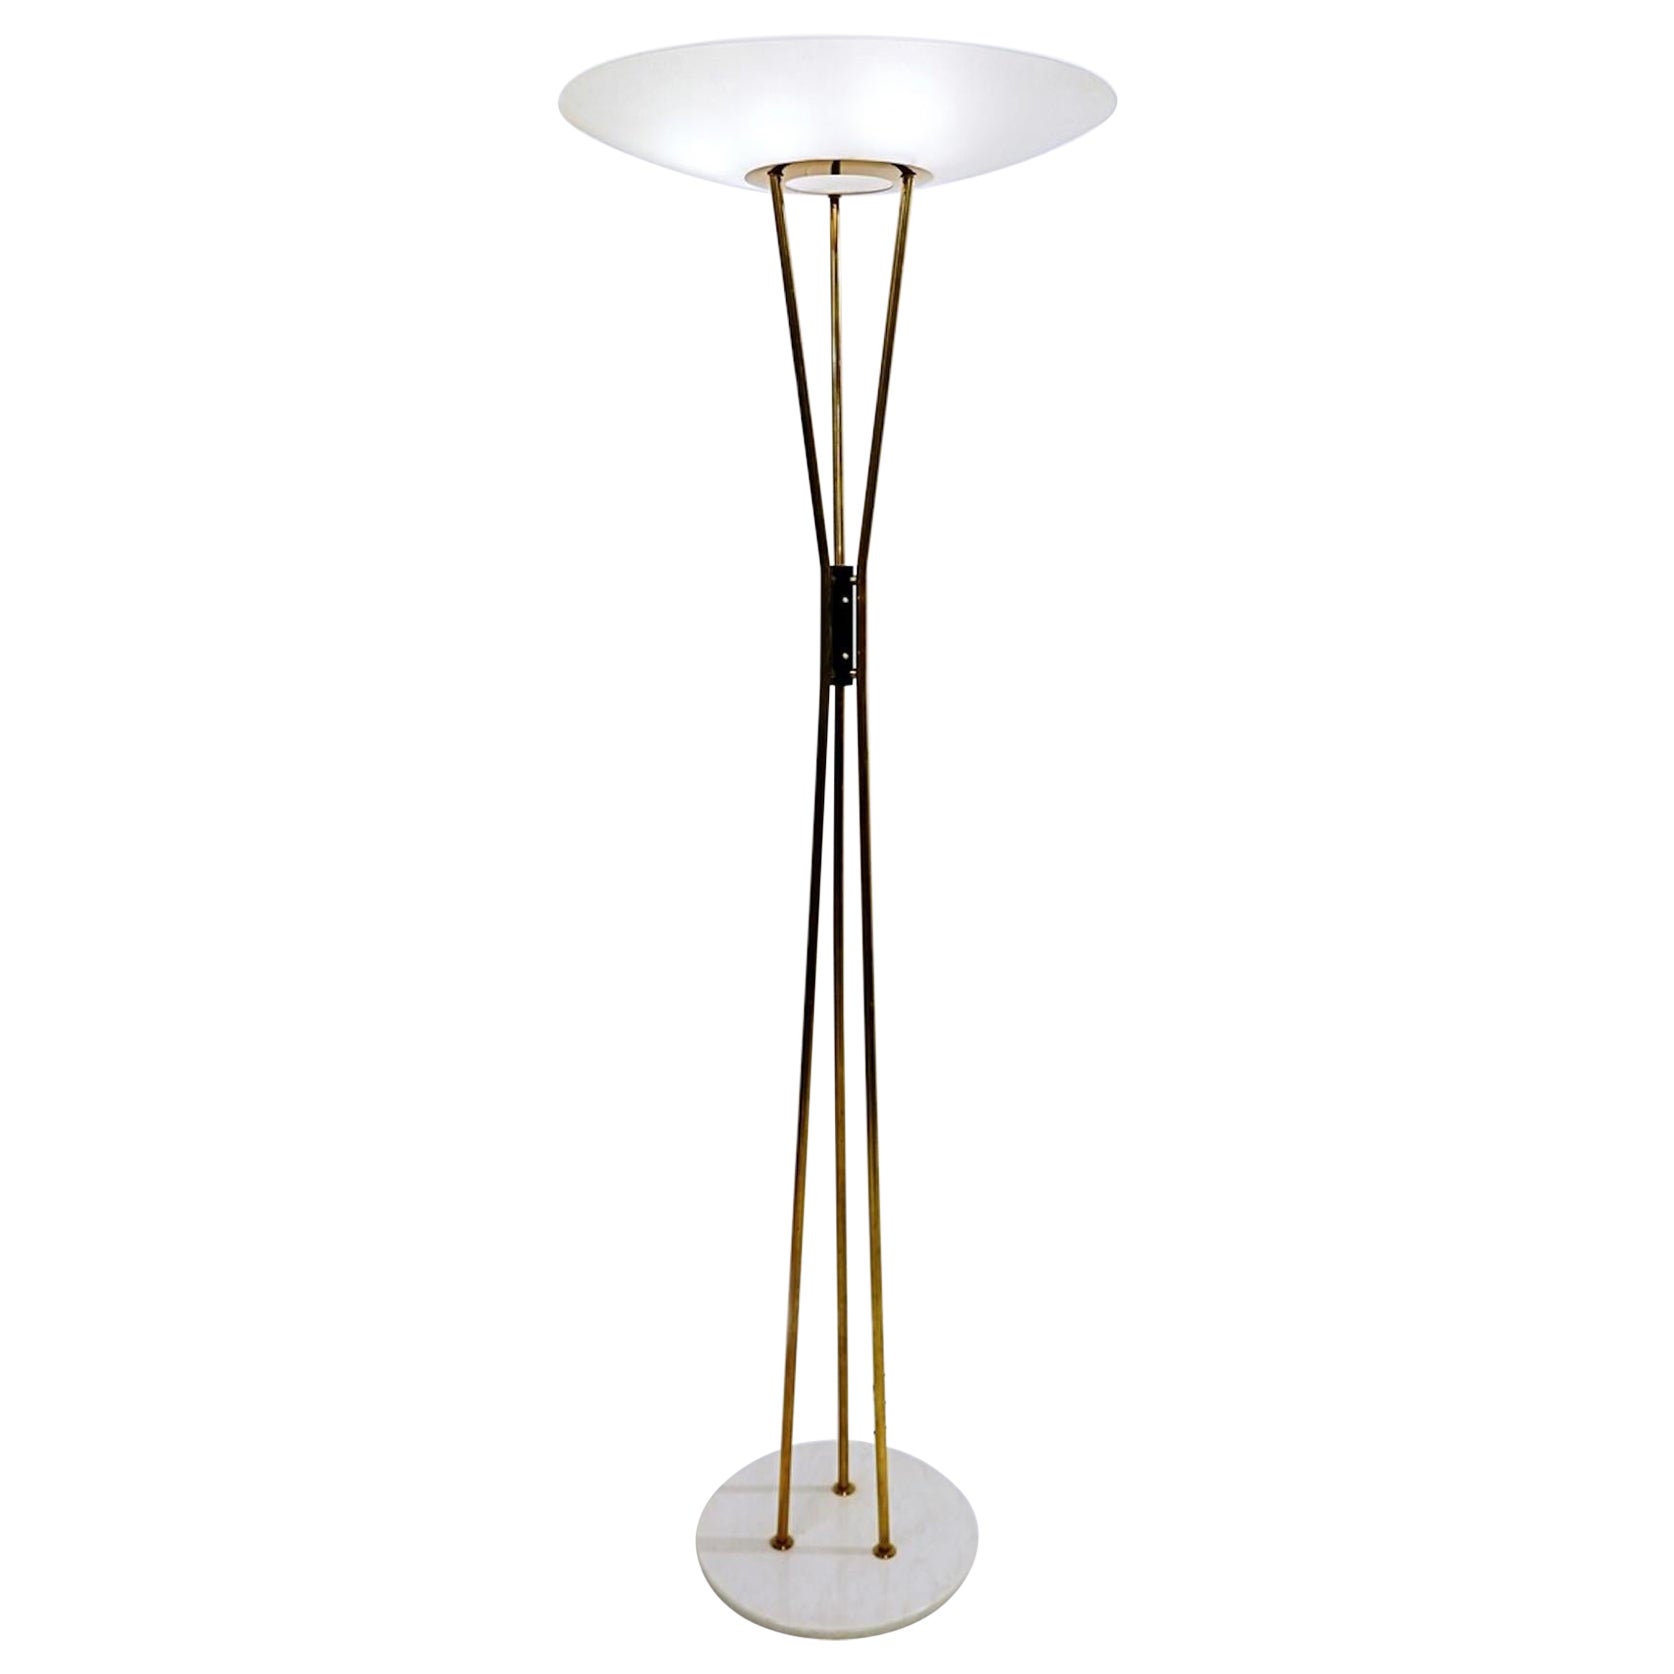 Mid-Century Modern Floor Lamp by Gaetano sciolari for Stilnovo, Italy 1950s For Sale